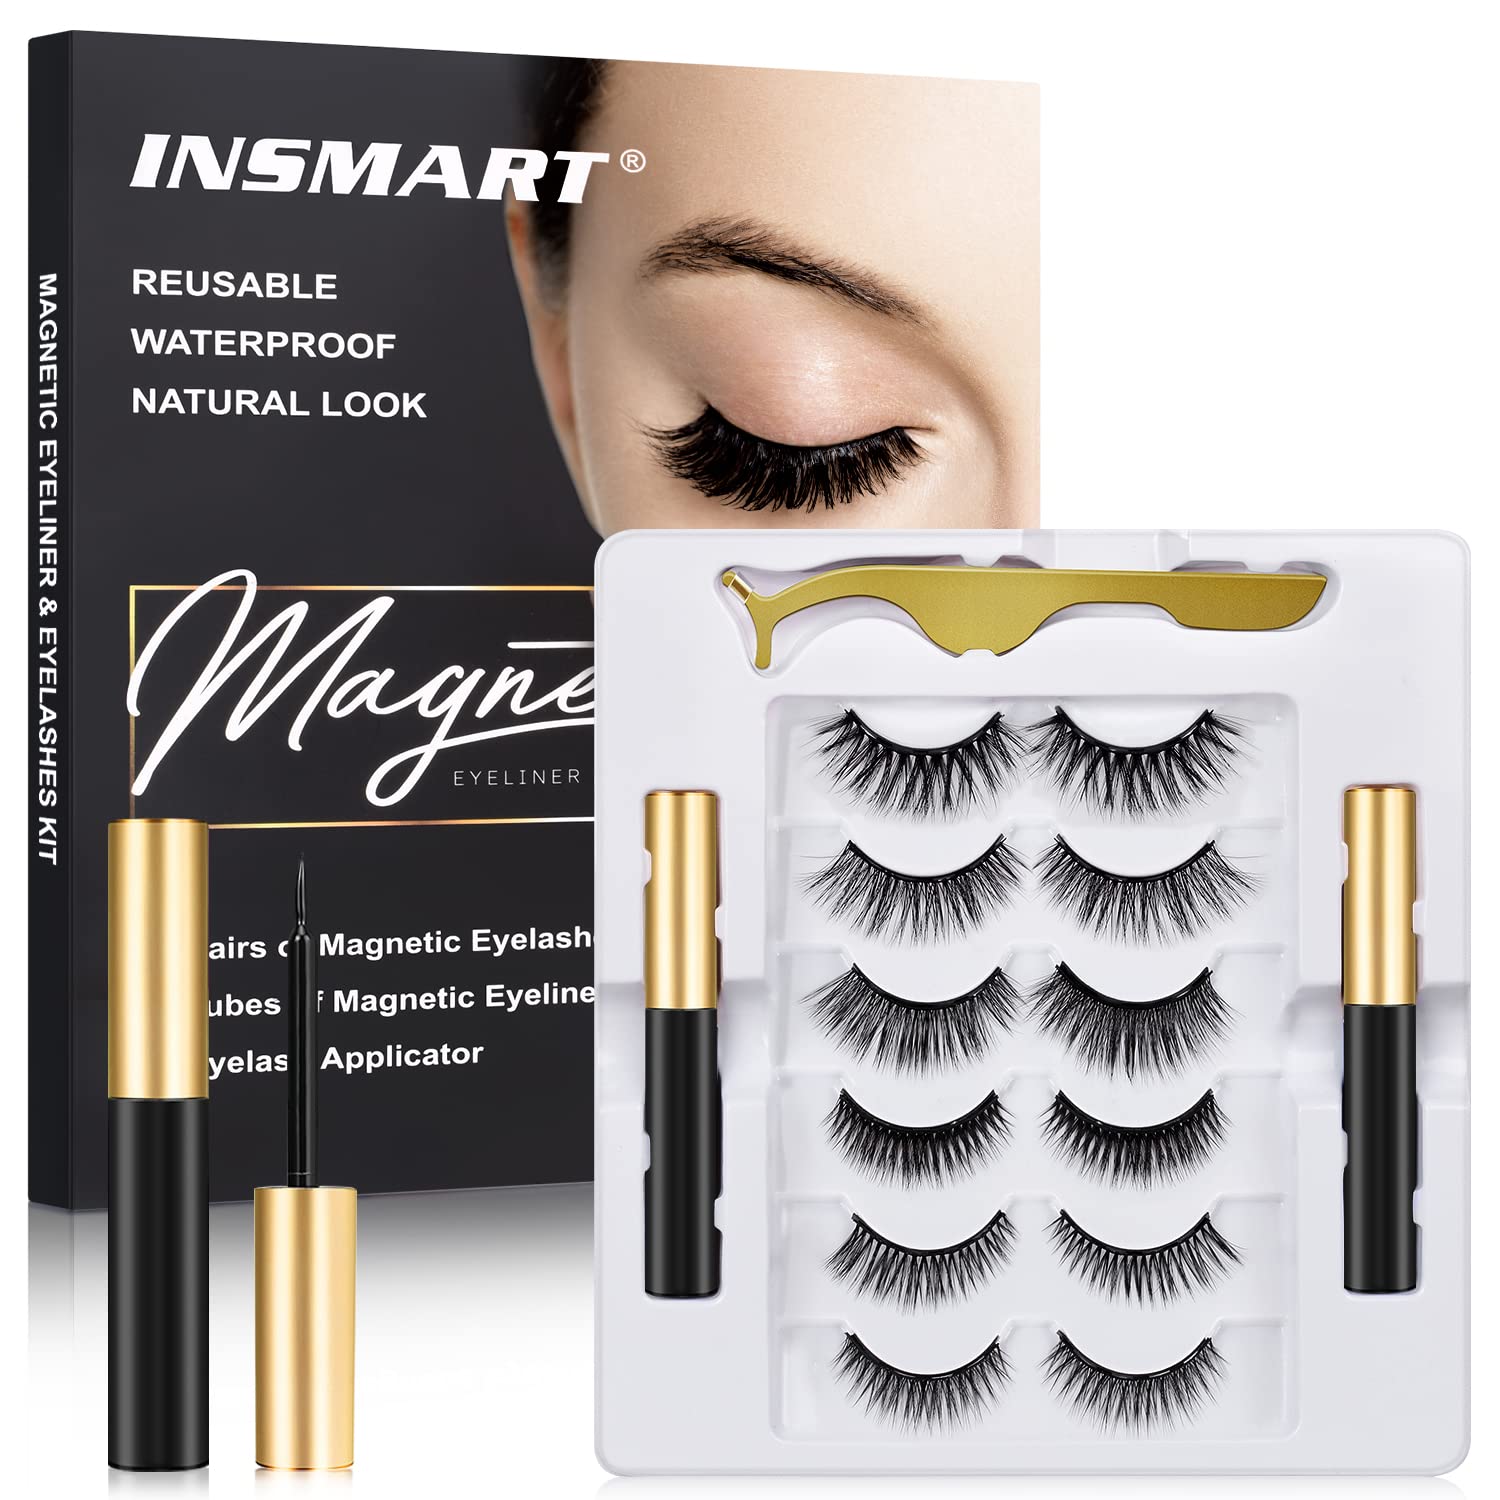 INSMART Tweezers & High-Strength Magnetic Eyelashes